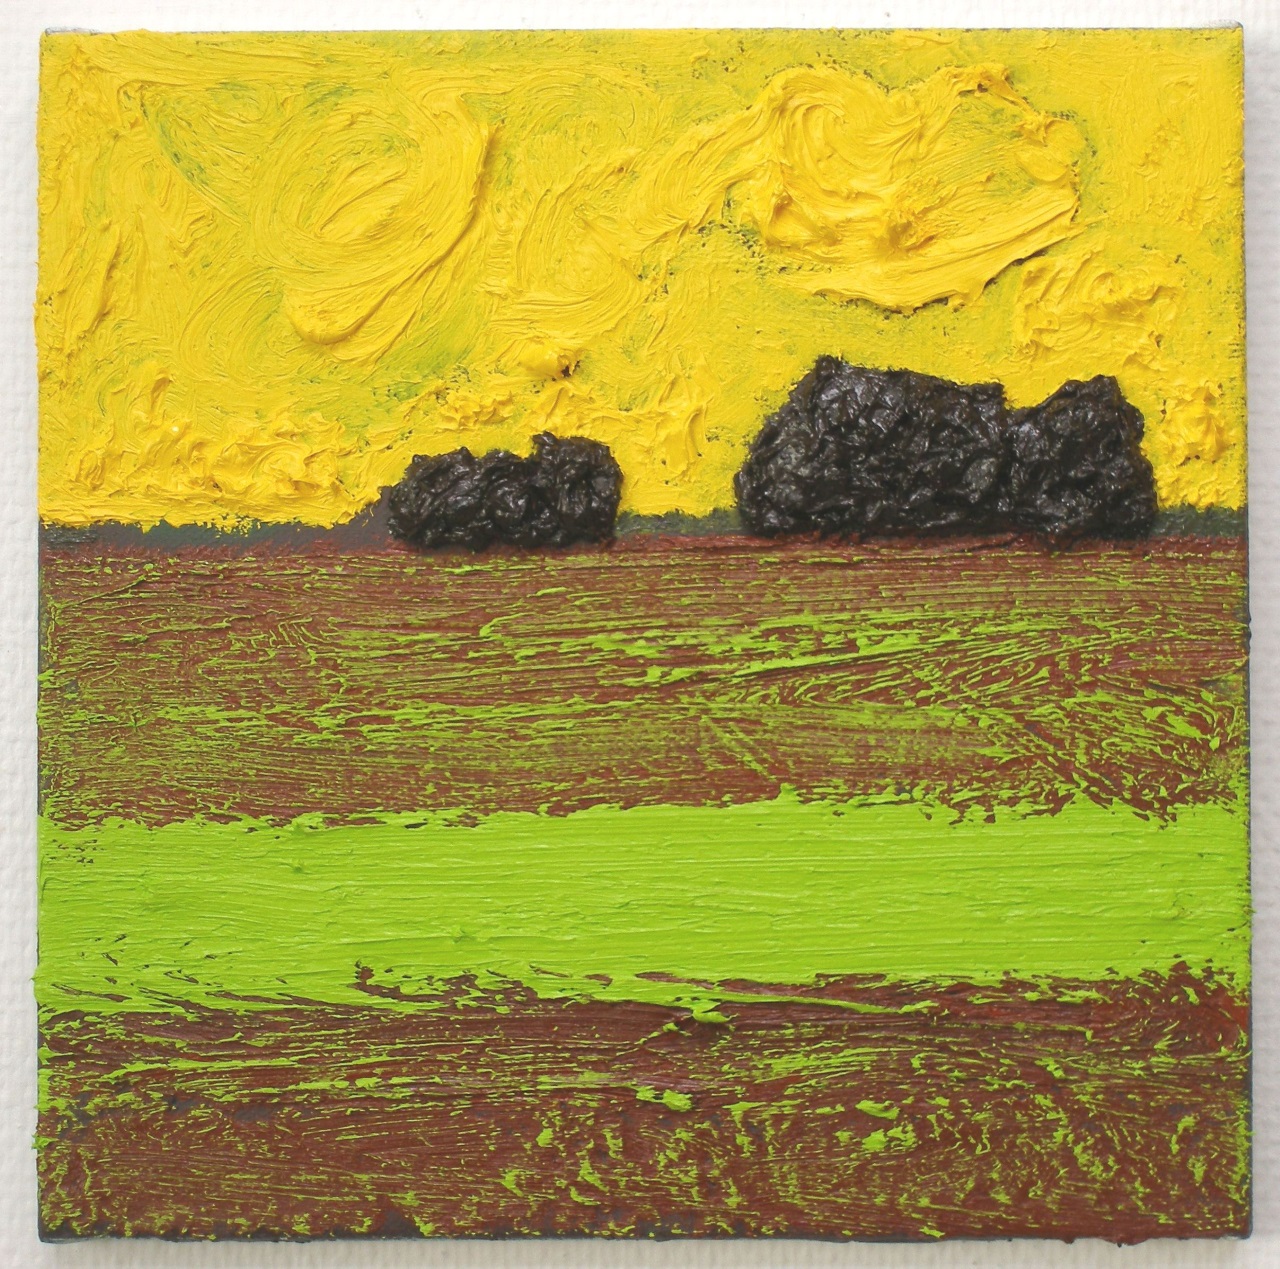 Soil/siesta, oil-mixedmedia on canvas, 30x30cm